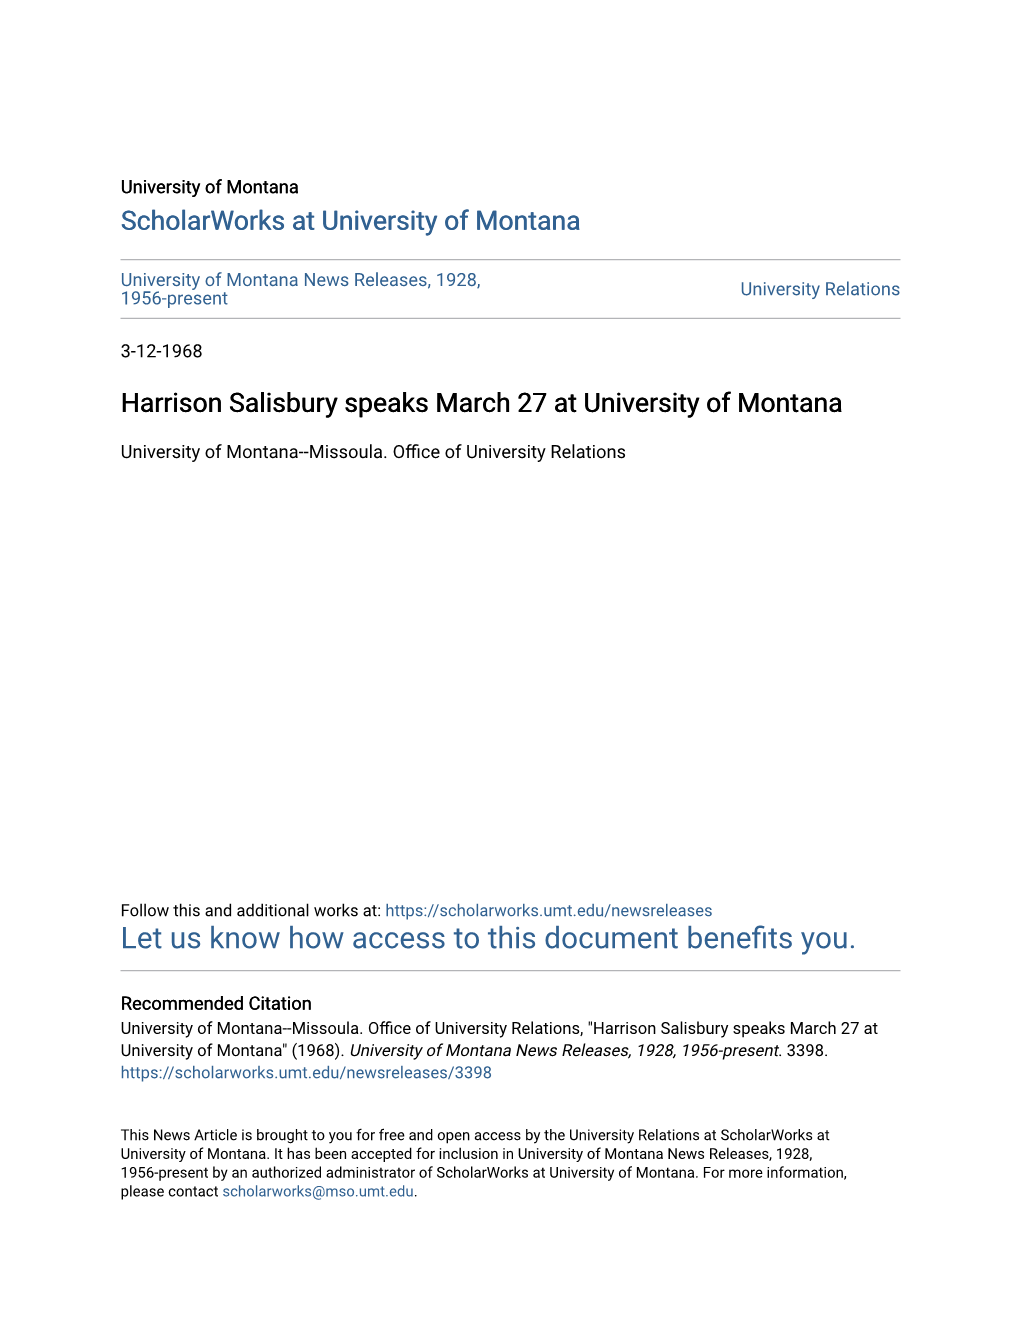 Harrison Salisbury Speaks March 27 at University of Montana